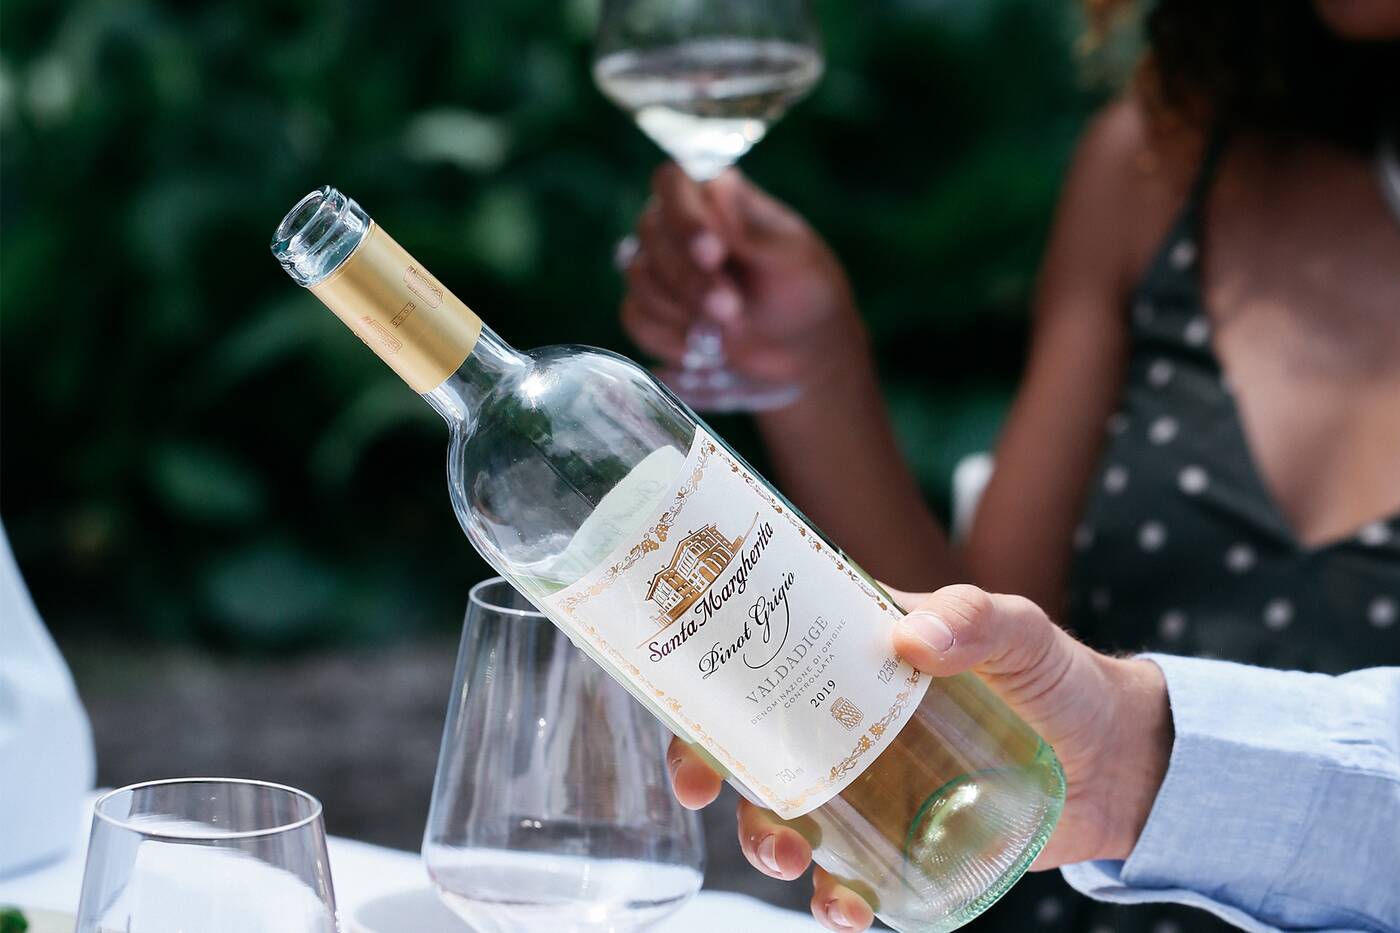  The Pinot Grigio Santa Margherita Valdadige is a sustainable option for Toronto wine lovers